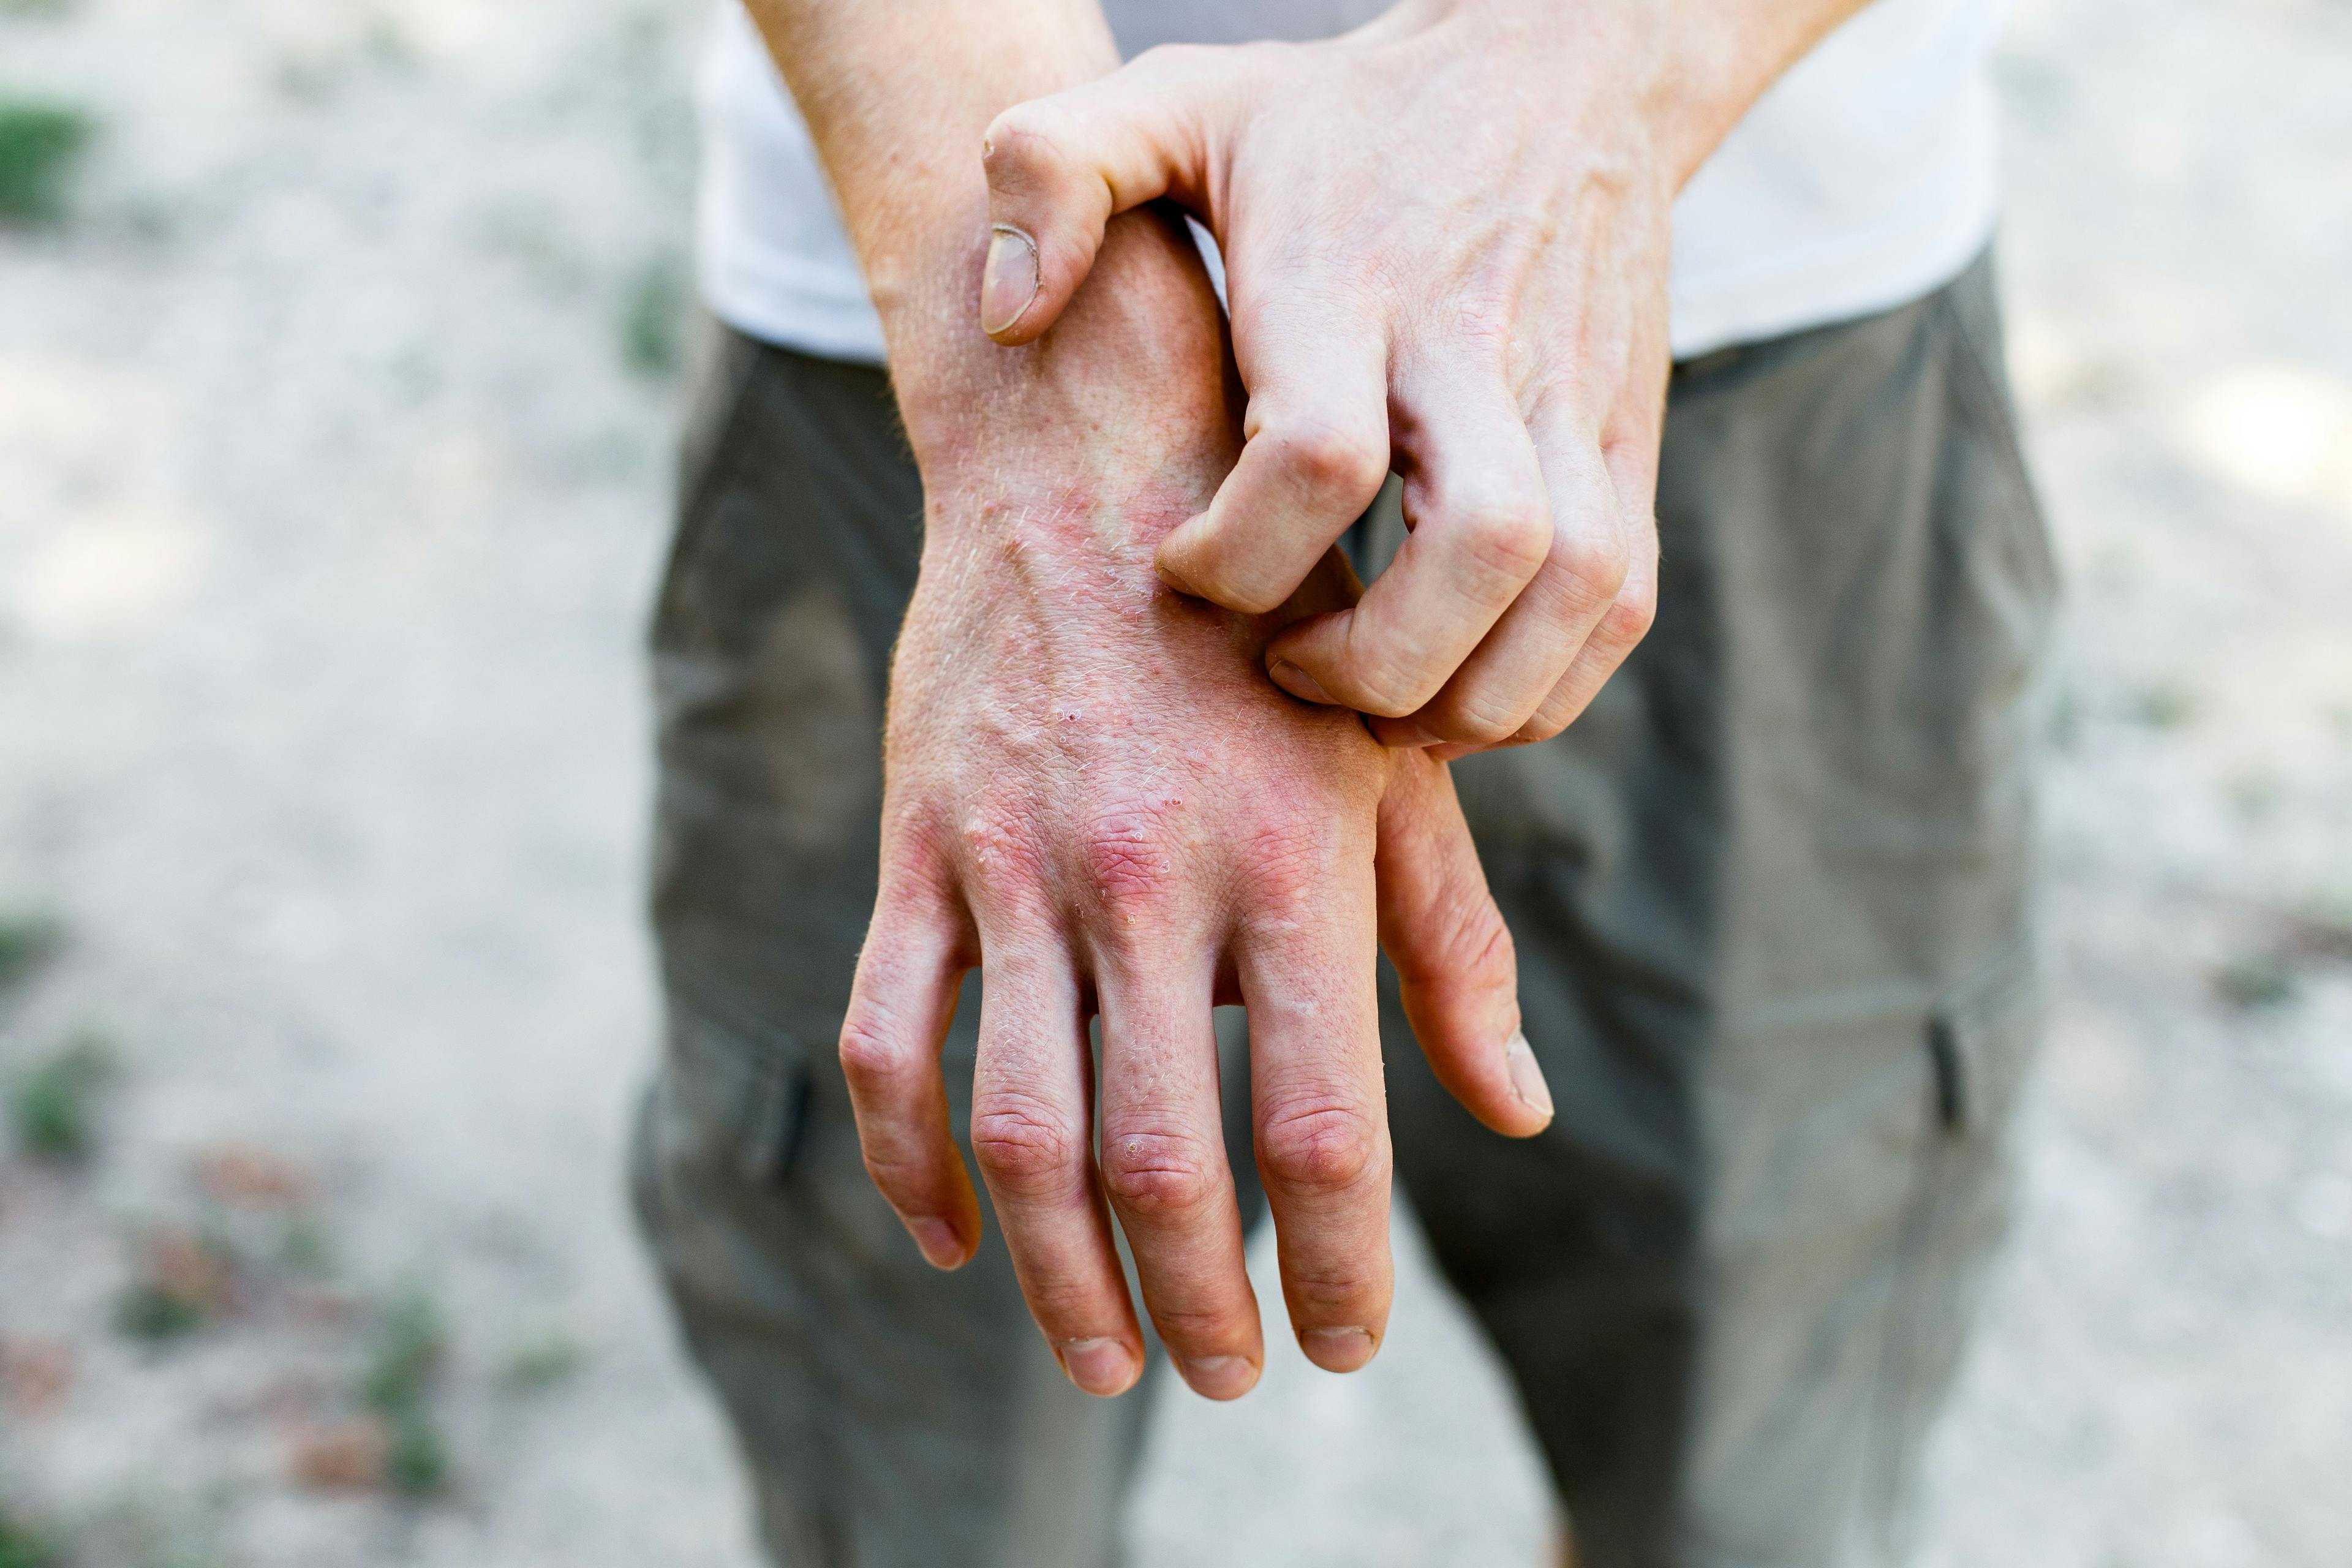 Patient scratching atopic dermatitis (AD) on hand | Image Credit: Ольга Тернавская - stock.adobe.com